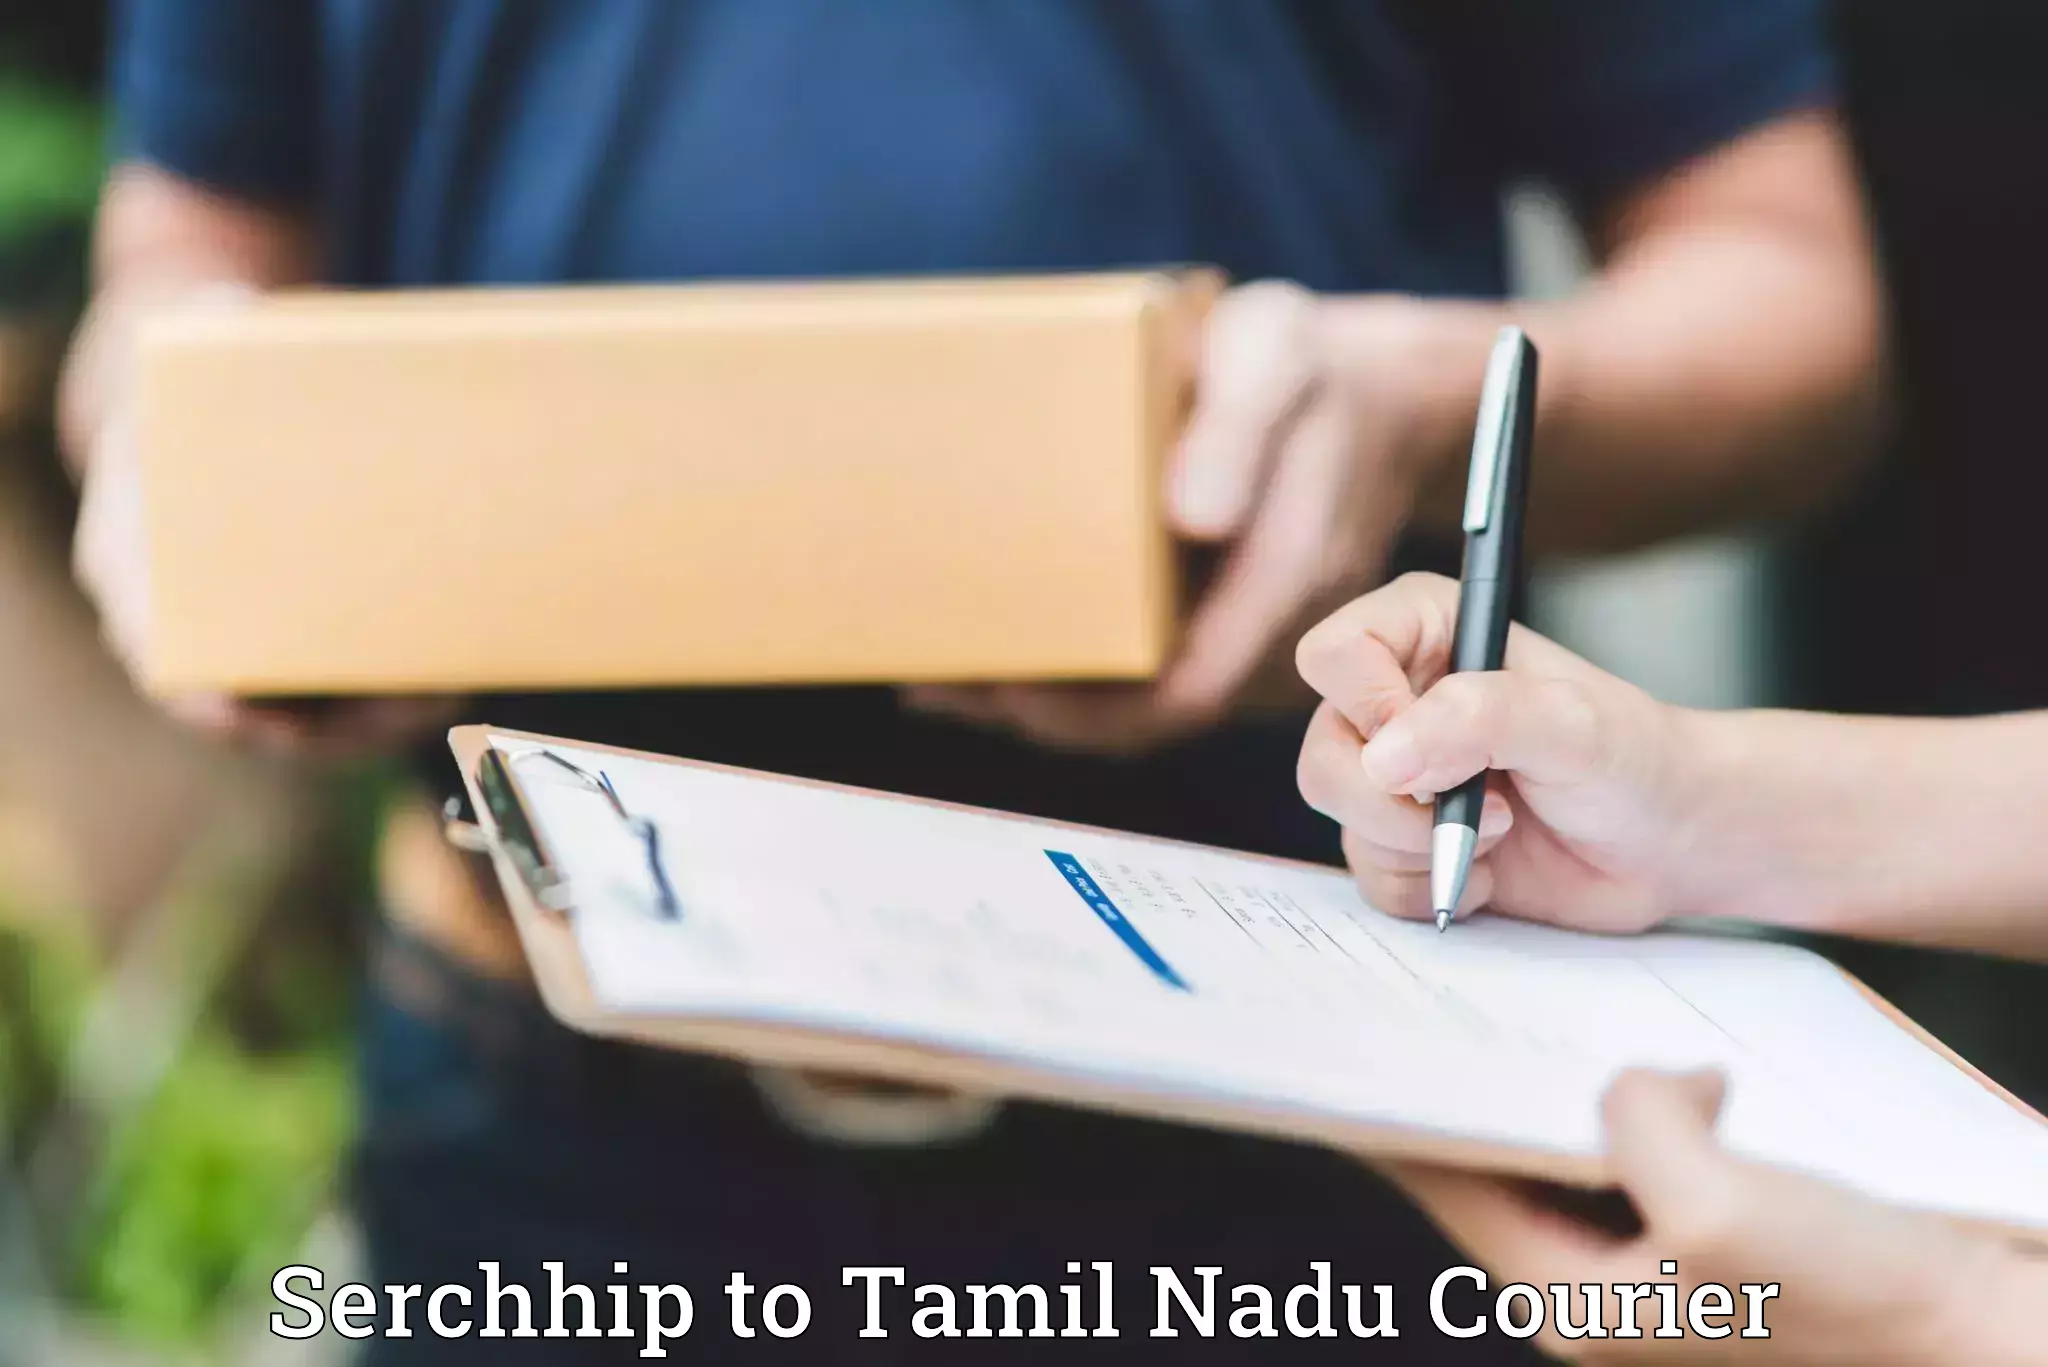 Trusted moving company Serchhip to Tamil Nadu